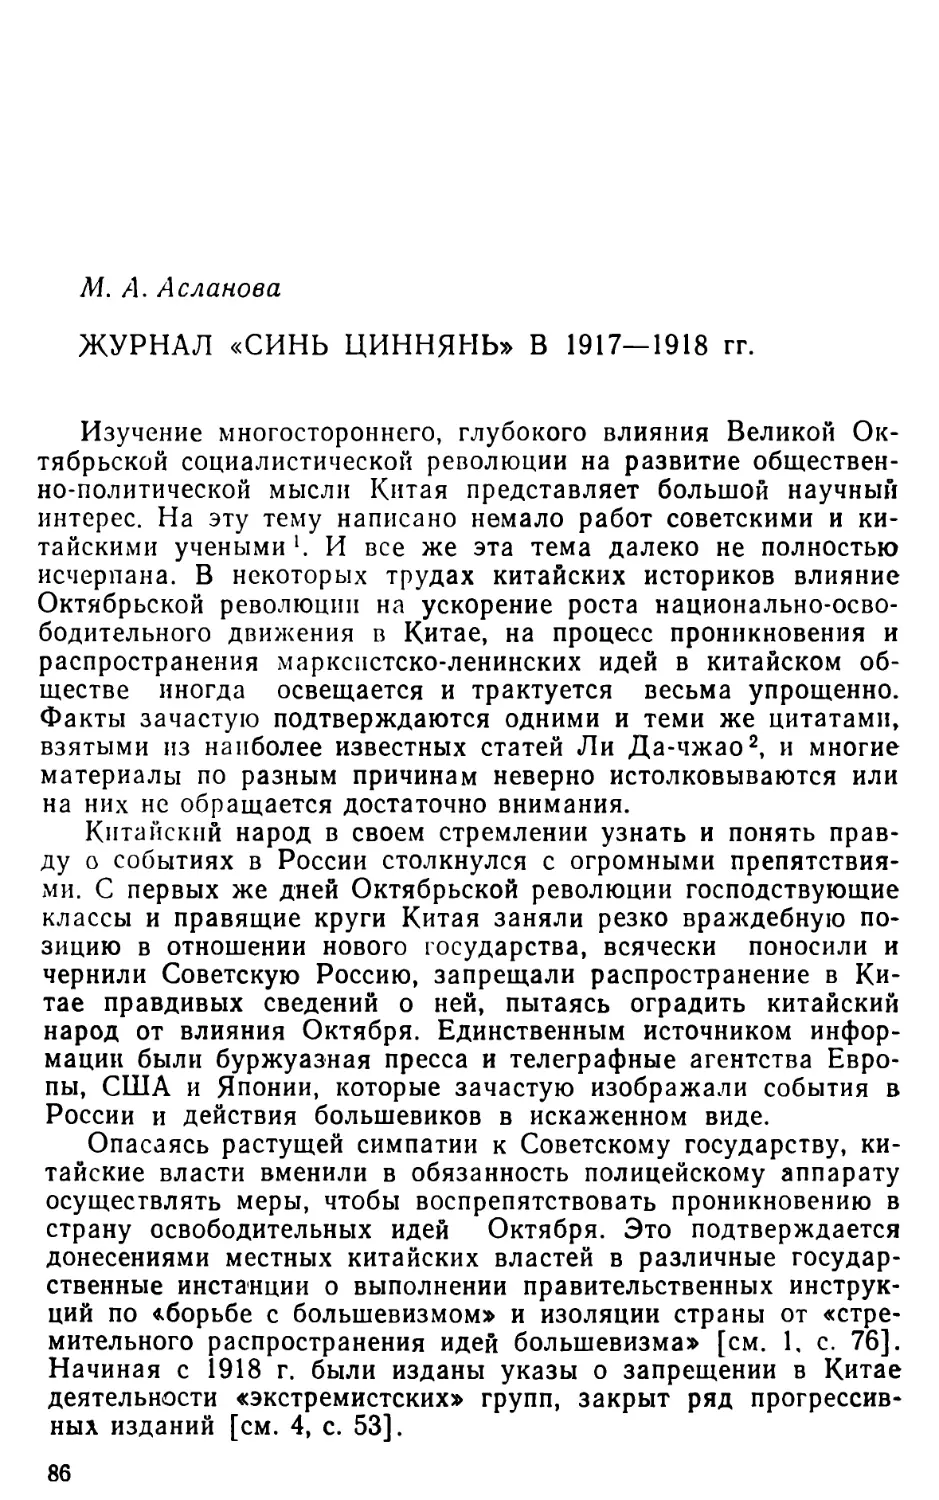 Асланова М. А. Журнал «Синь циннянь» в 1917—1918 гг